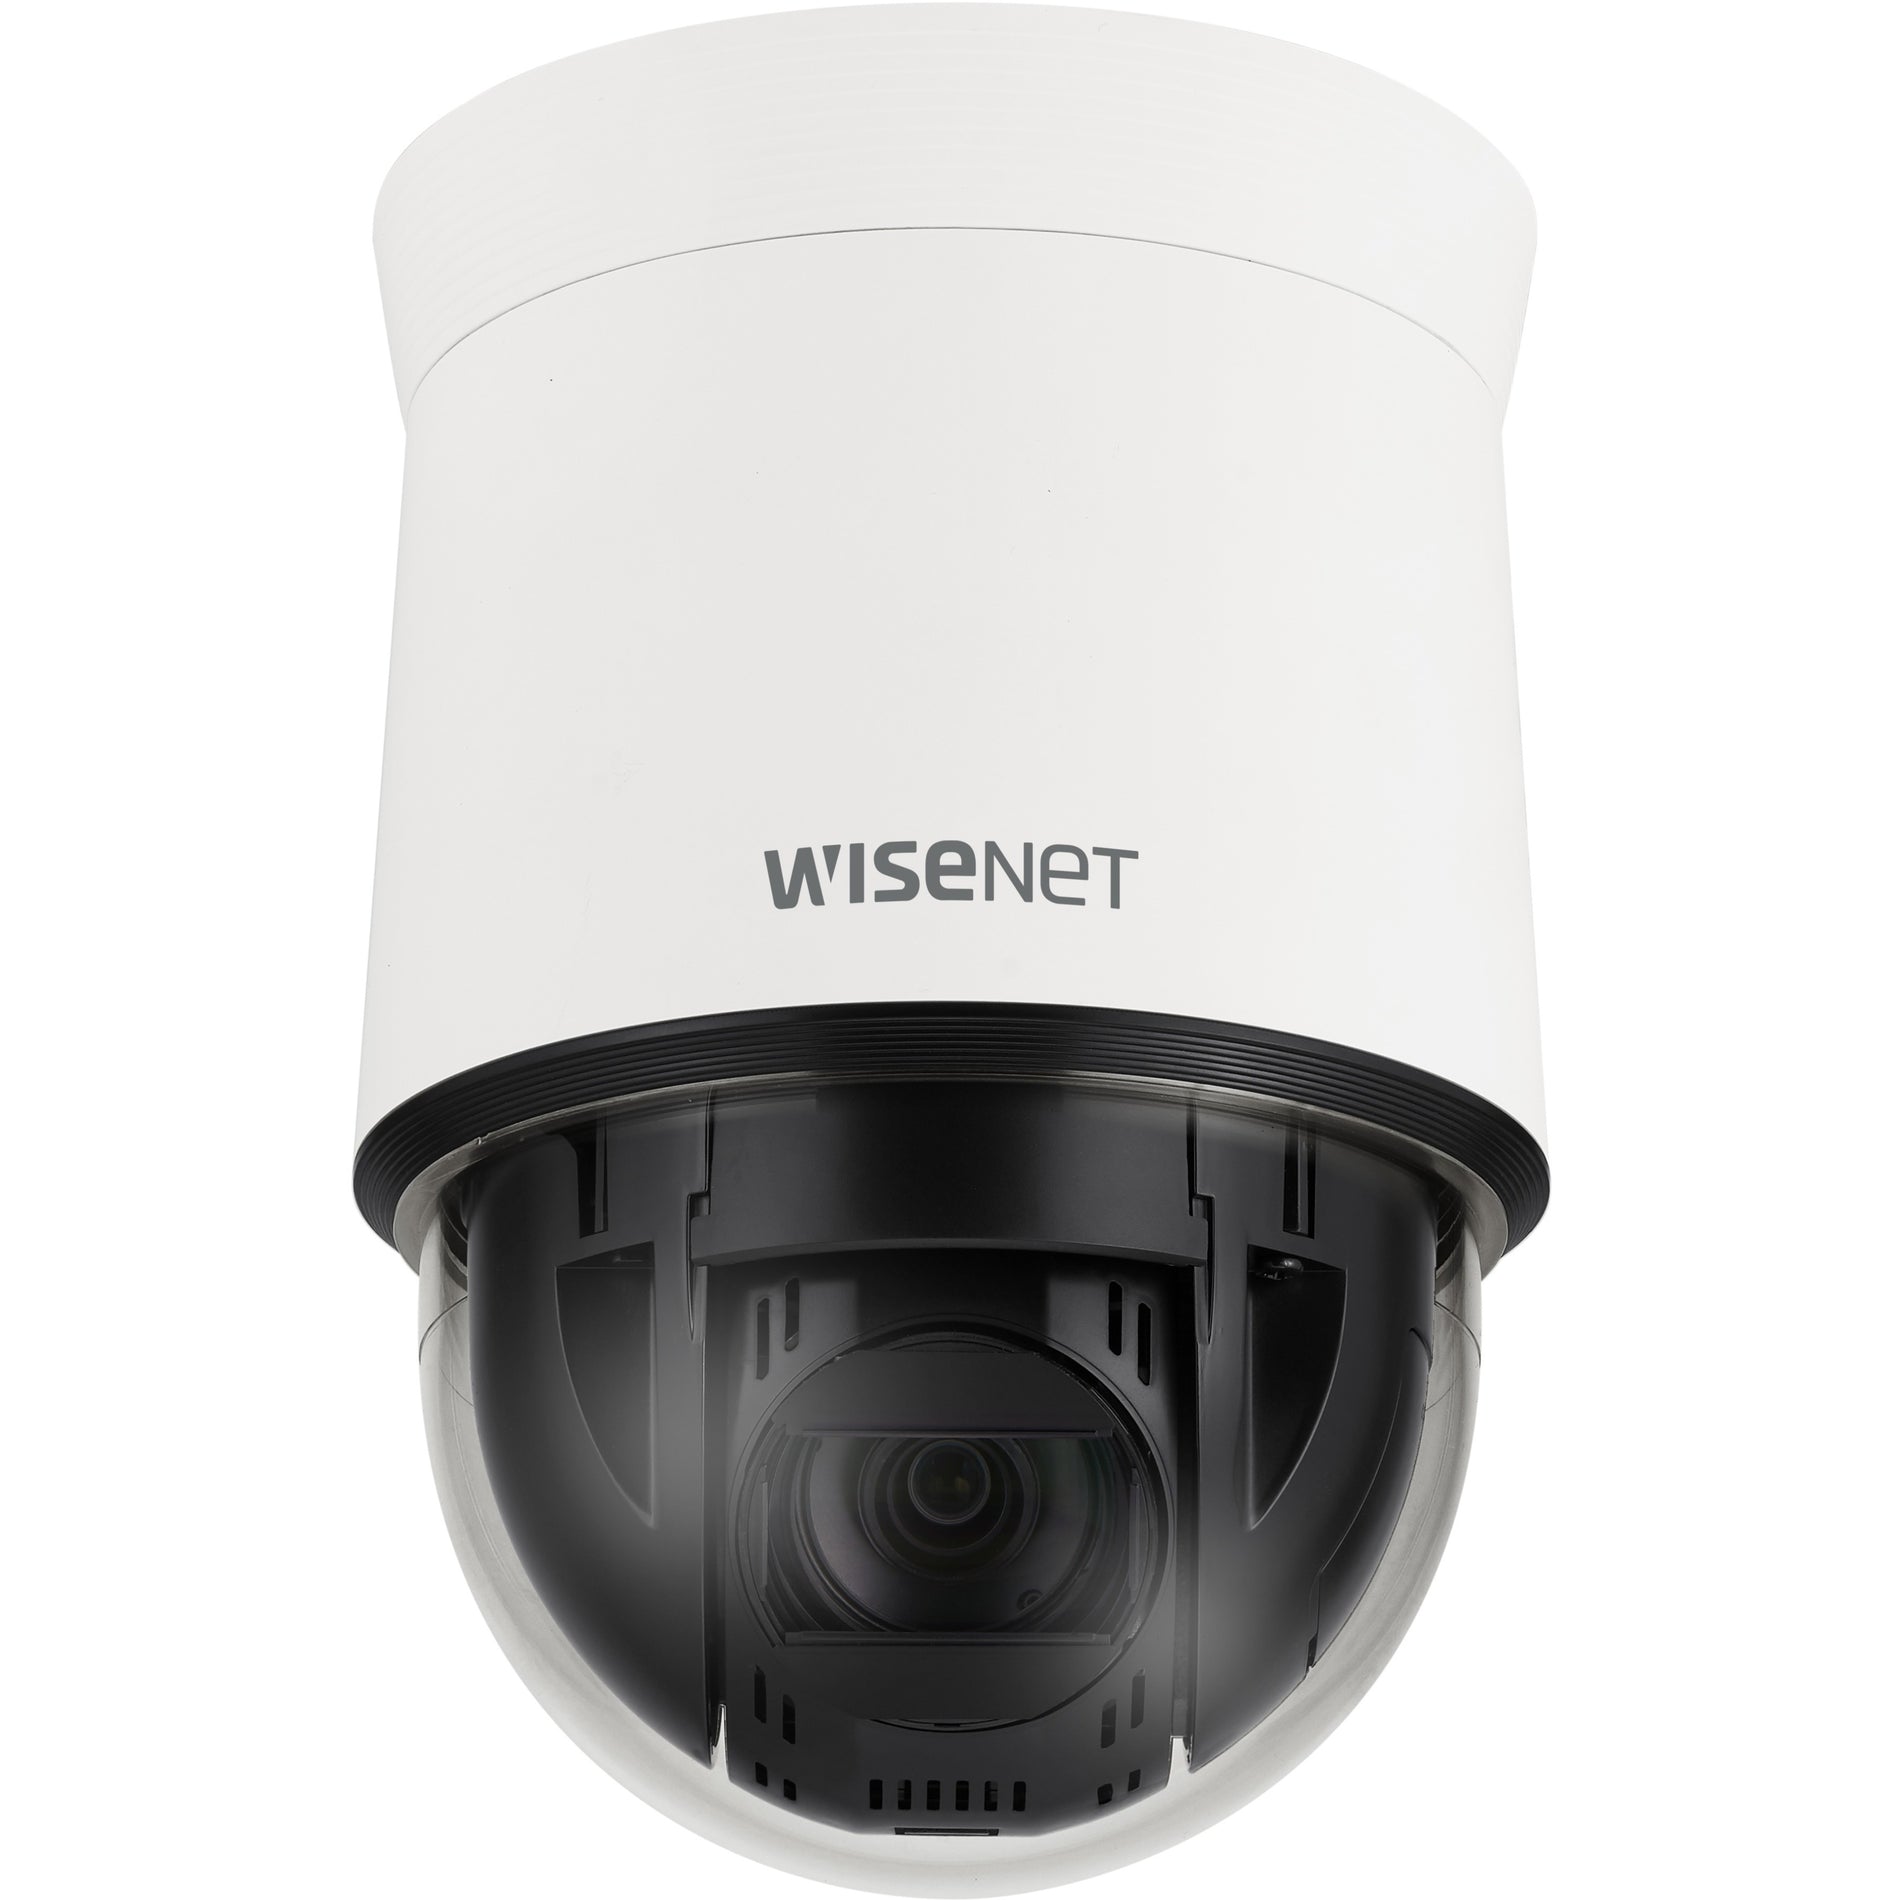 Wisenet QNP-6250 2MP 25x Zoom Network PTZ Camera, Full HD, Color